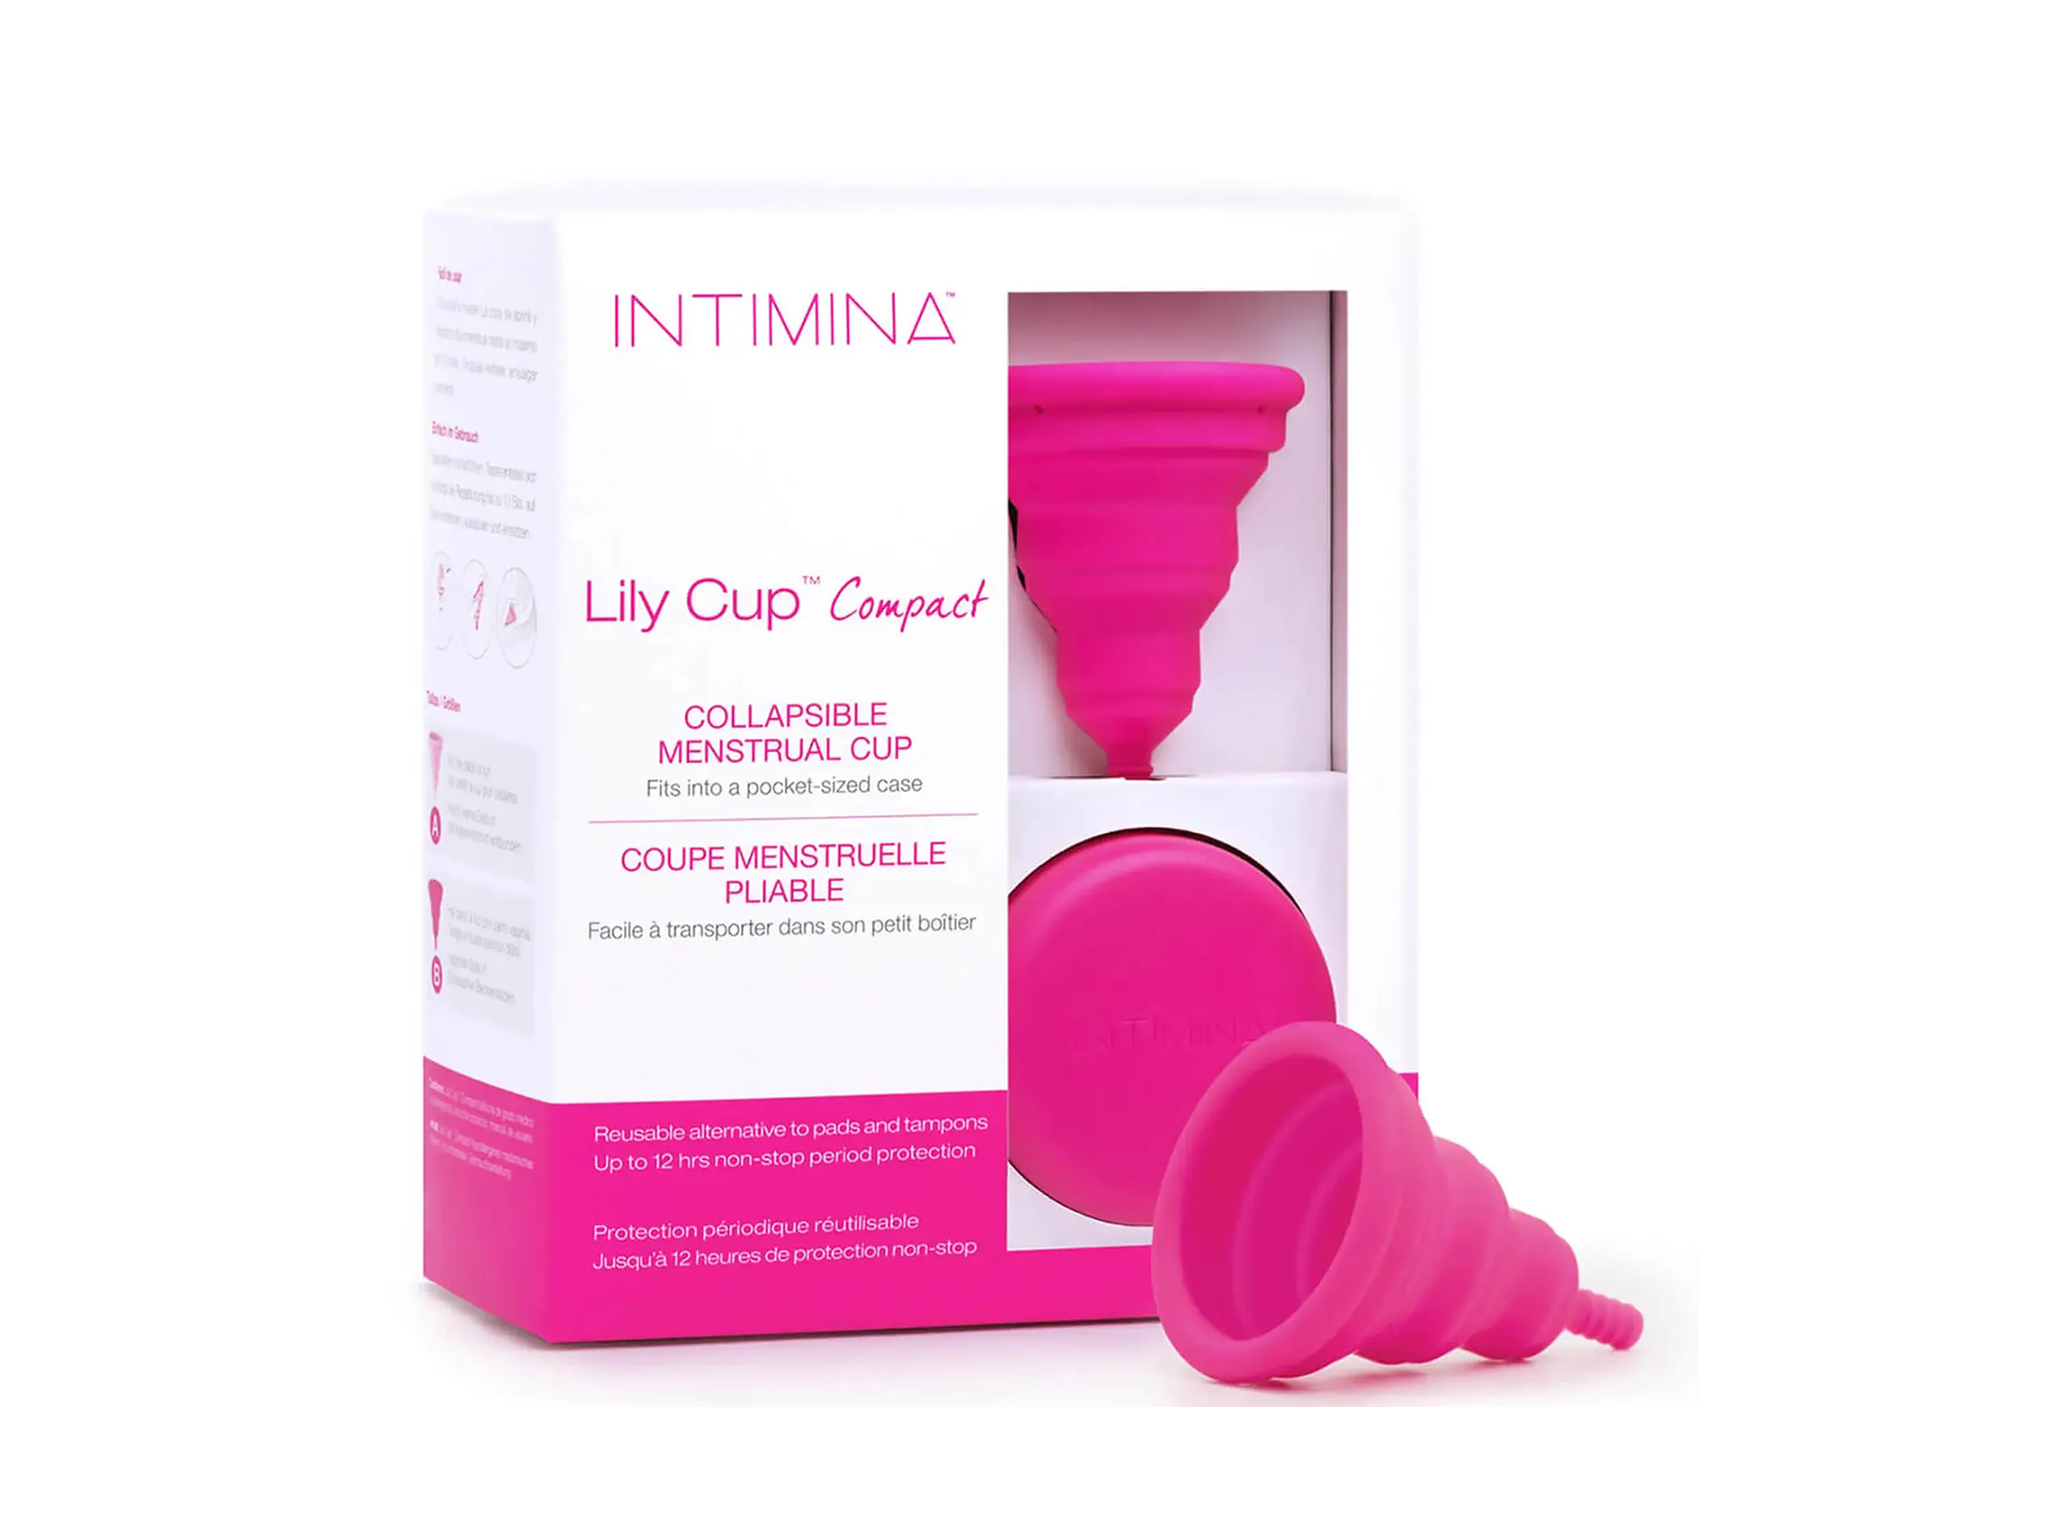 Intimina compact menstrual cup.png